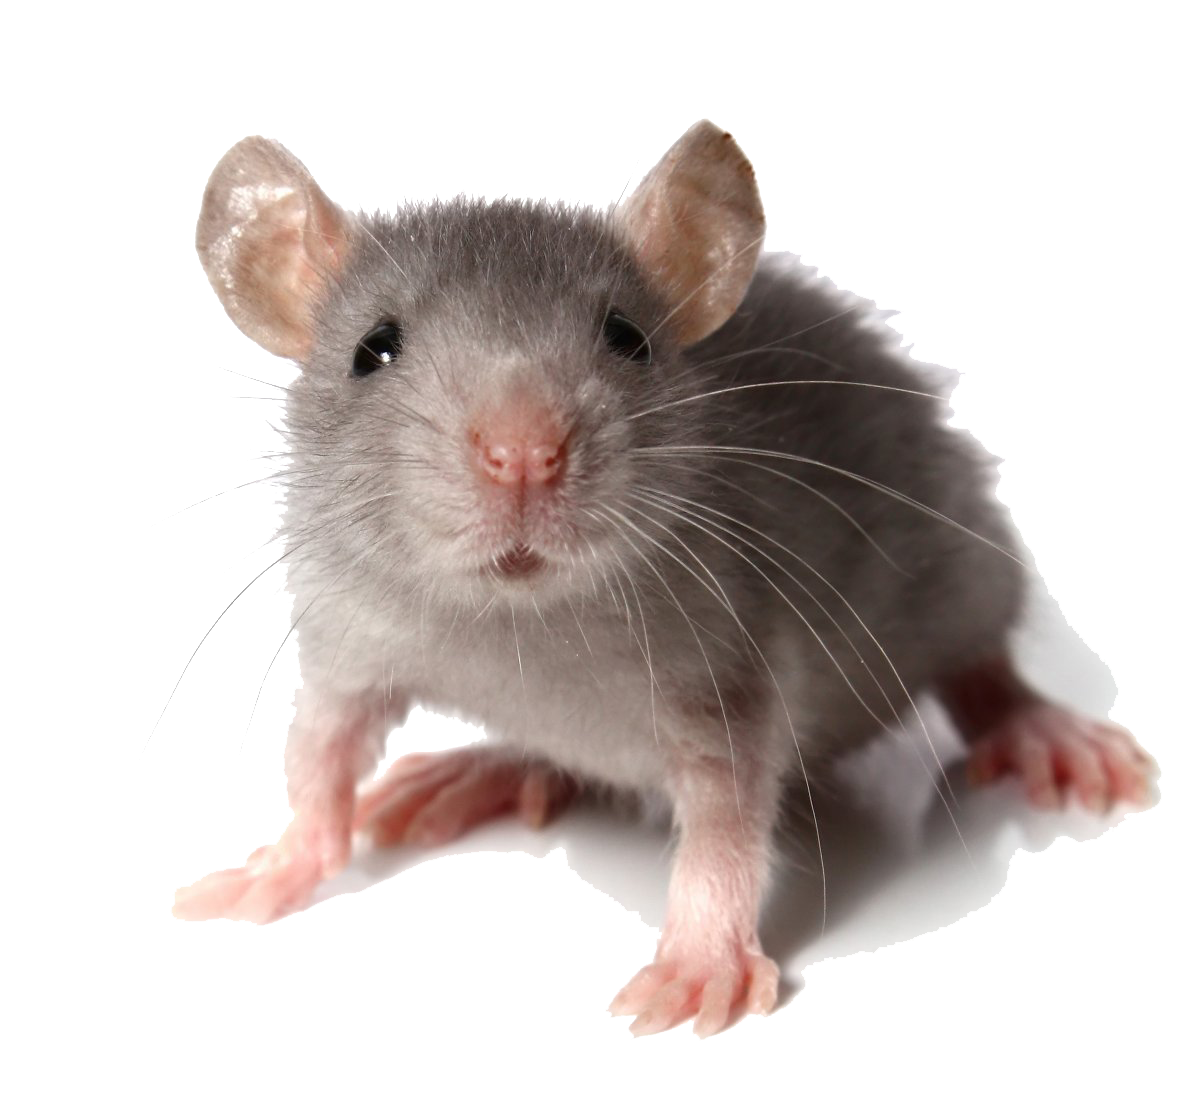 mouse transparent background